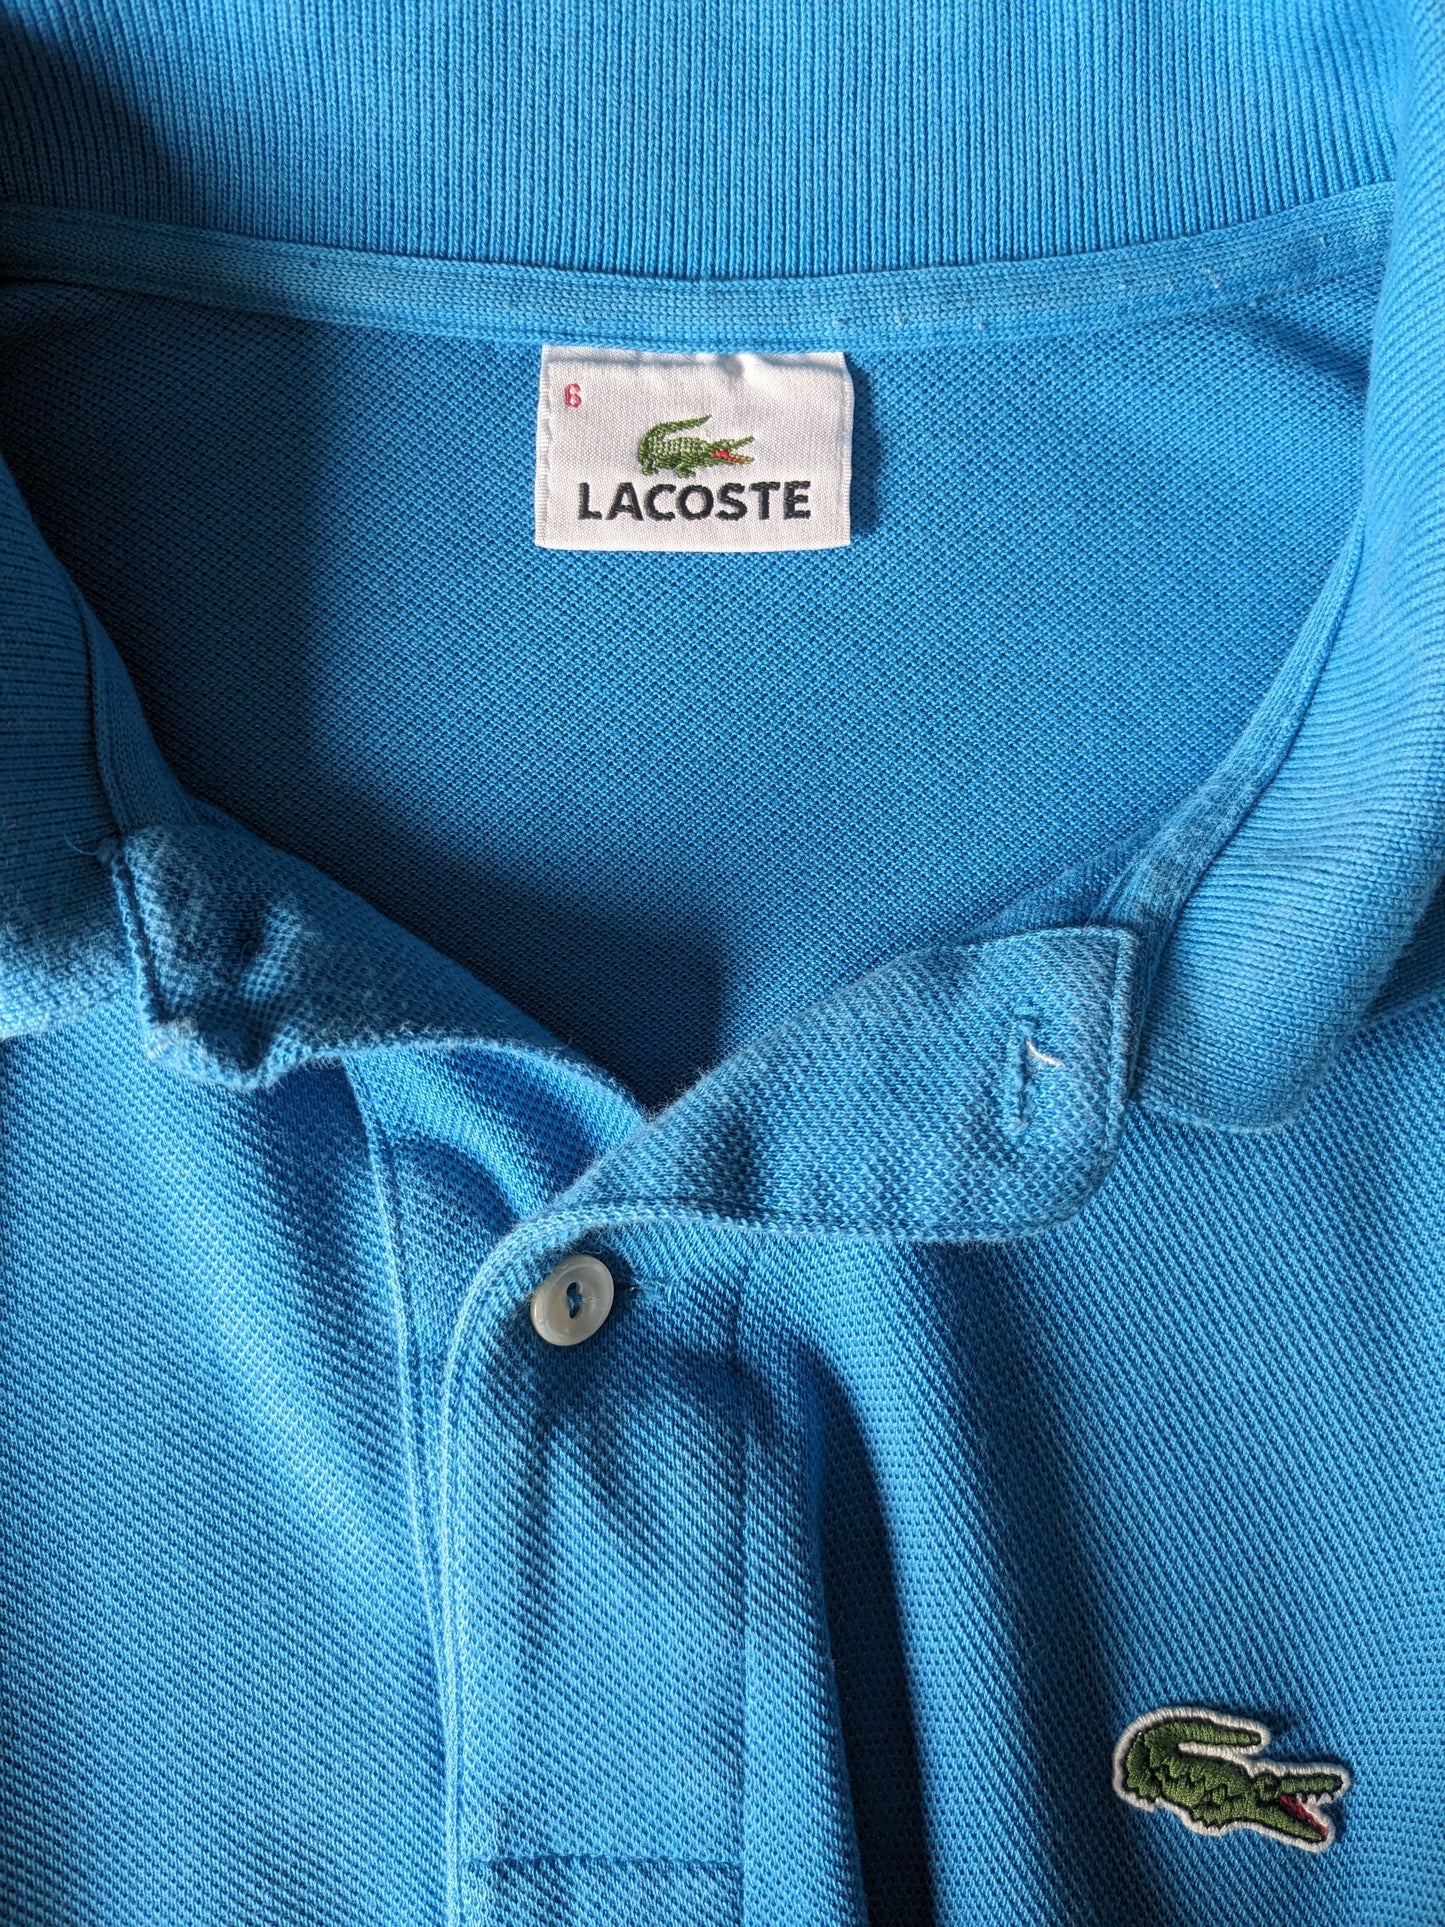 Lacoste Polo. Blue colored. Size 6 - XL.